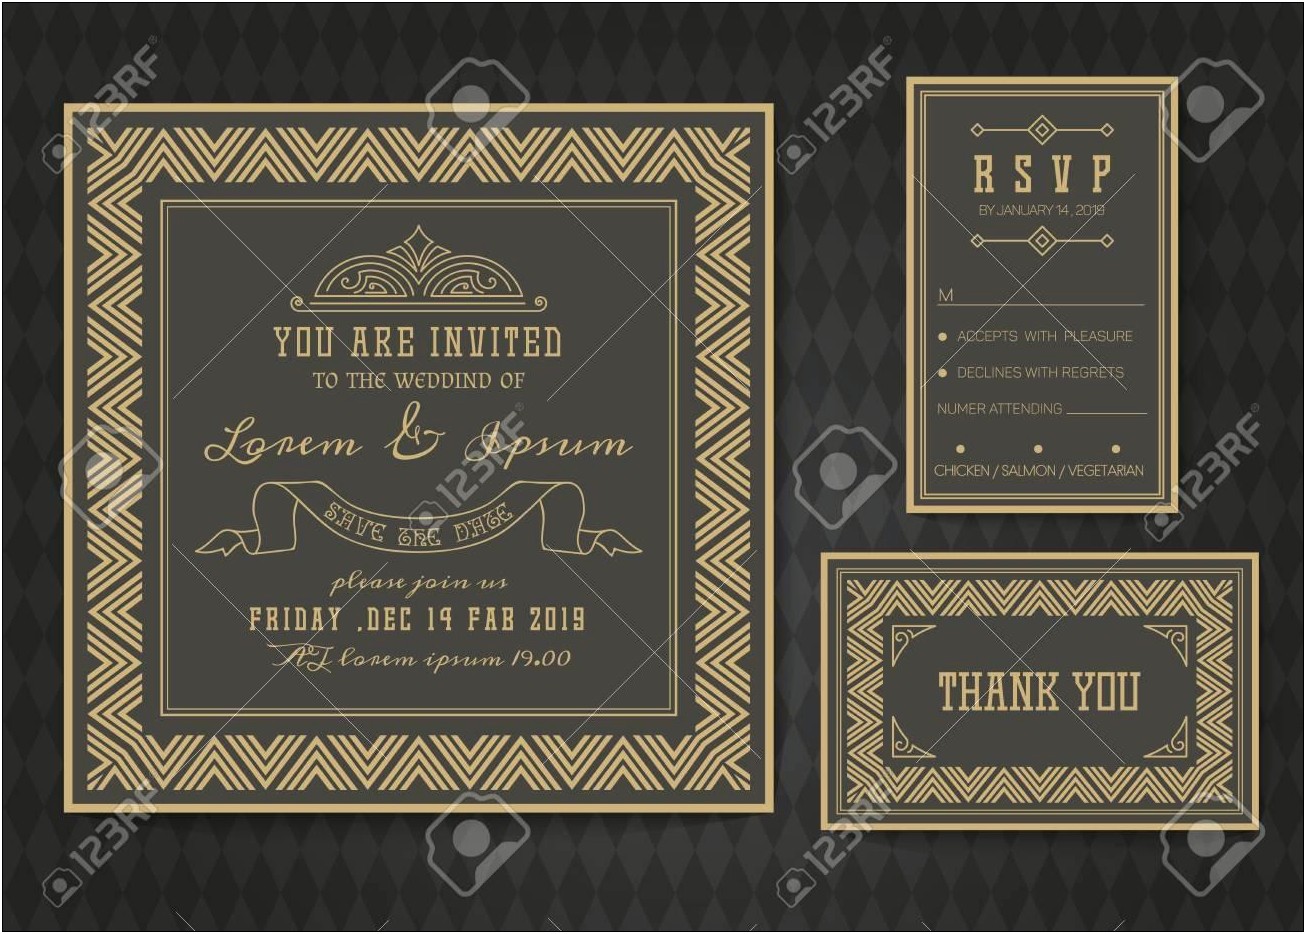 Free Art Deco Wedding Invitation Template